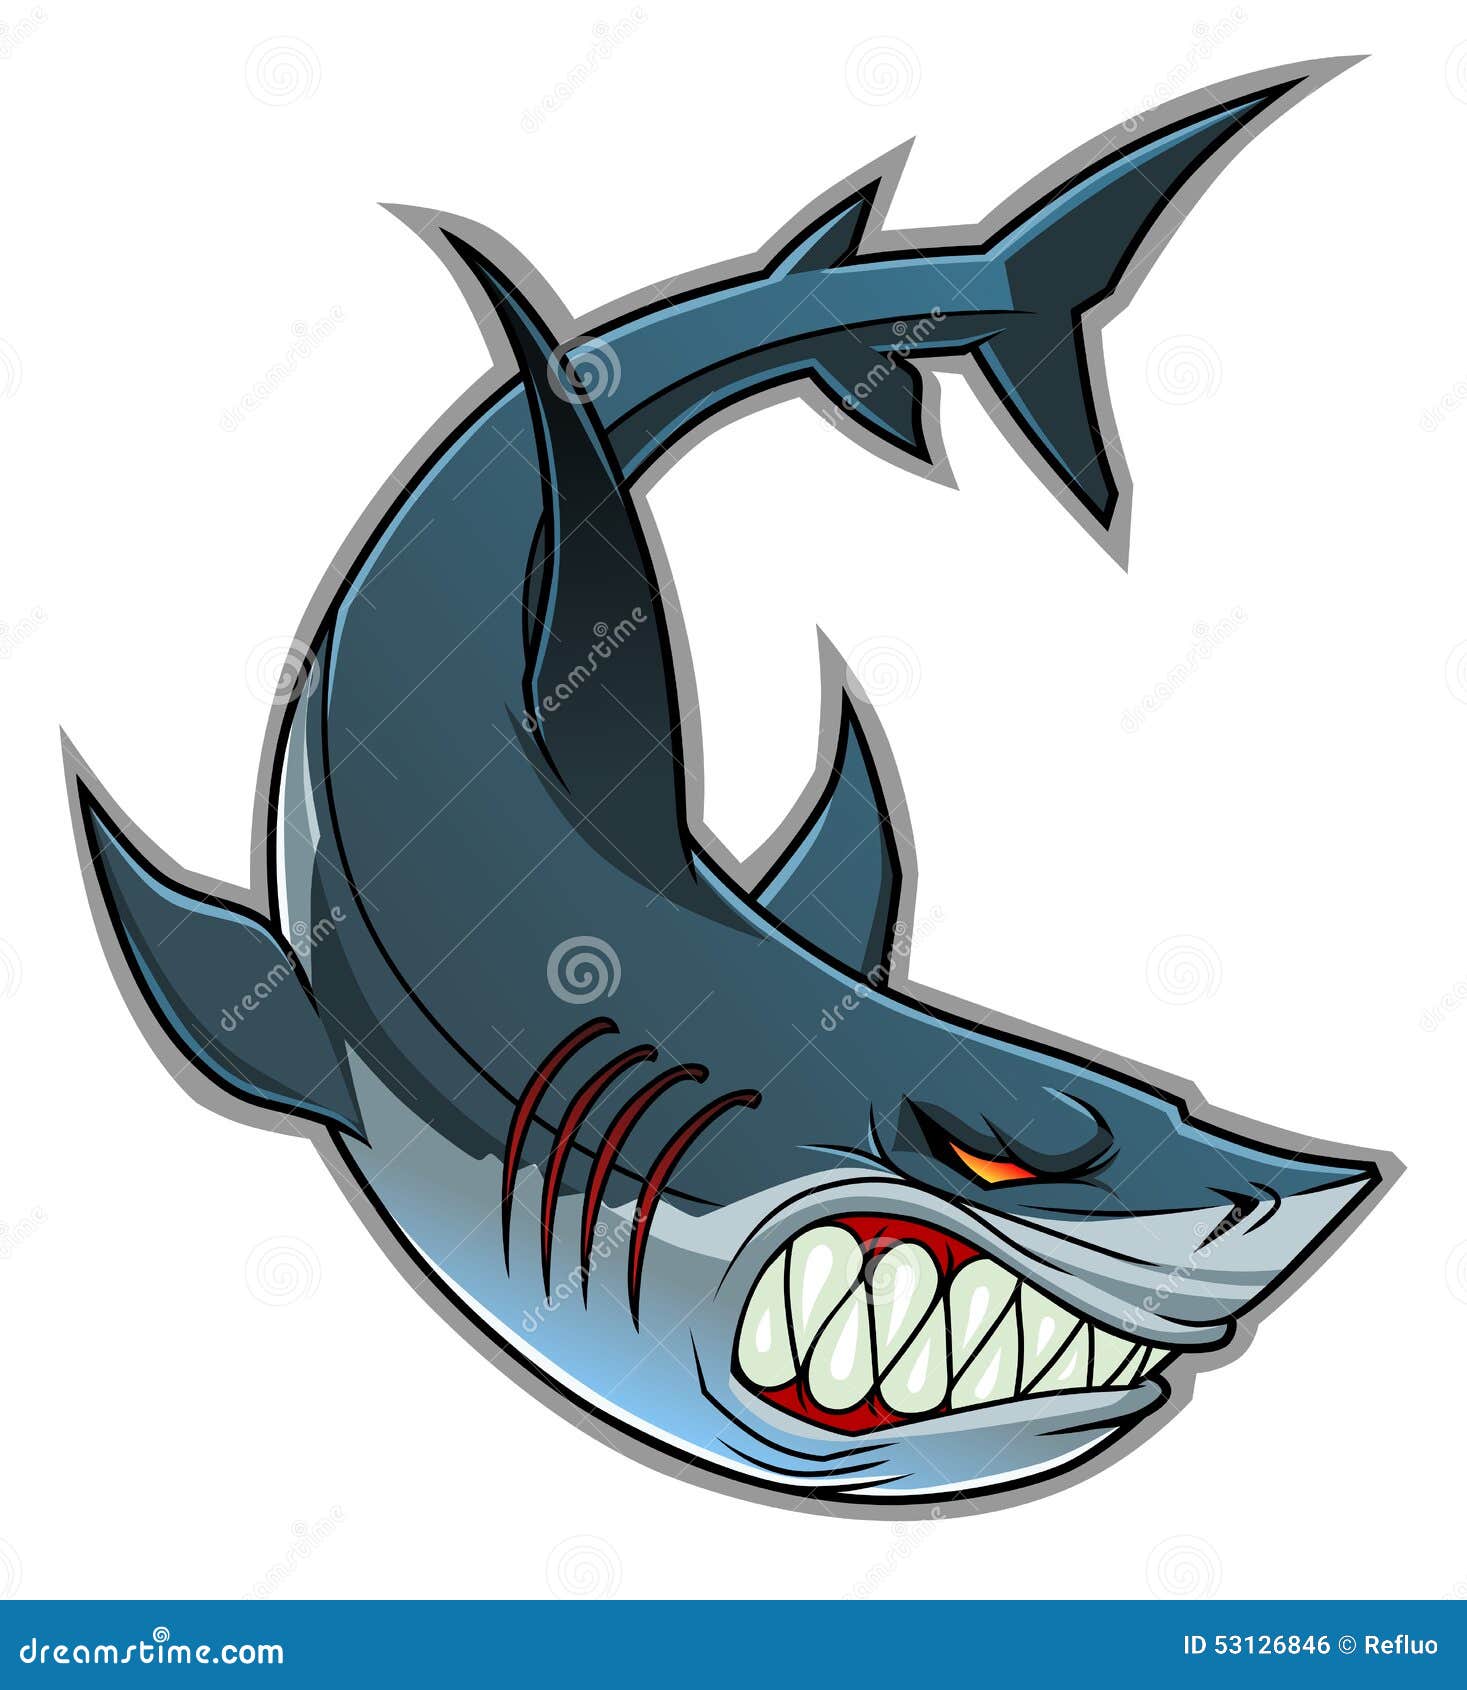 Mad Shark HTML 5 Game